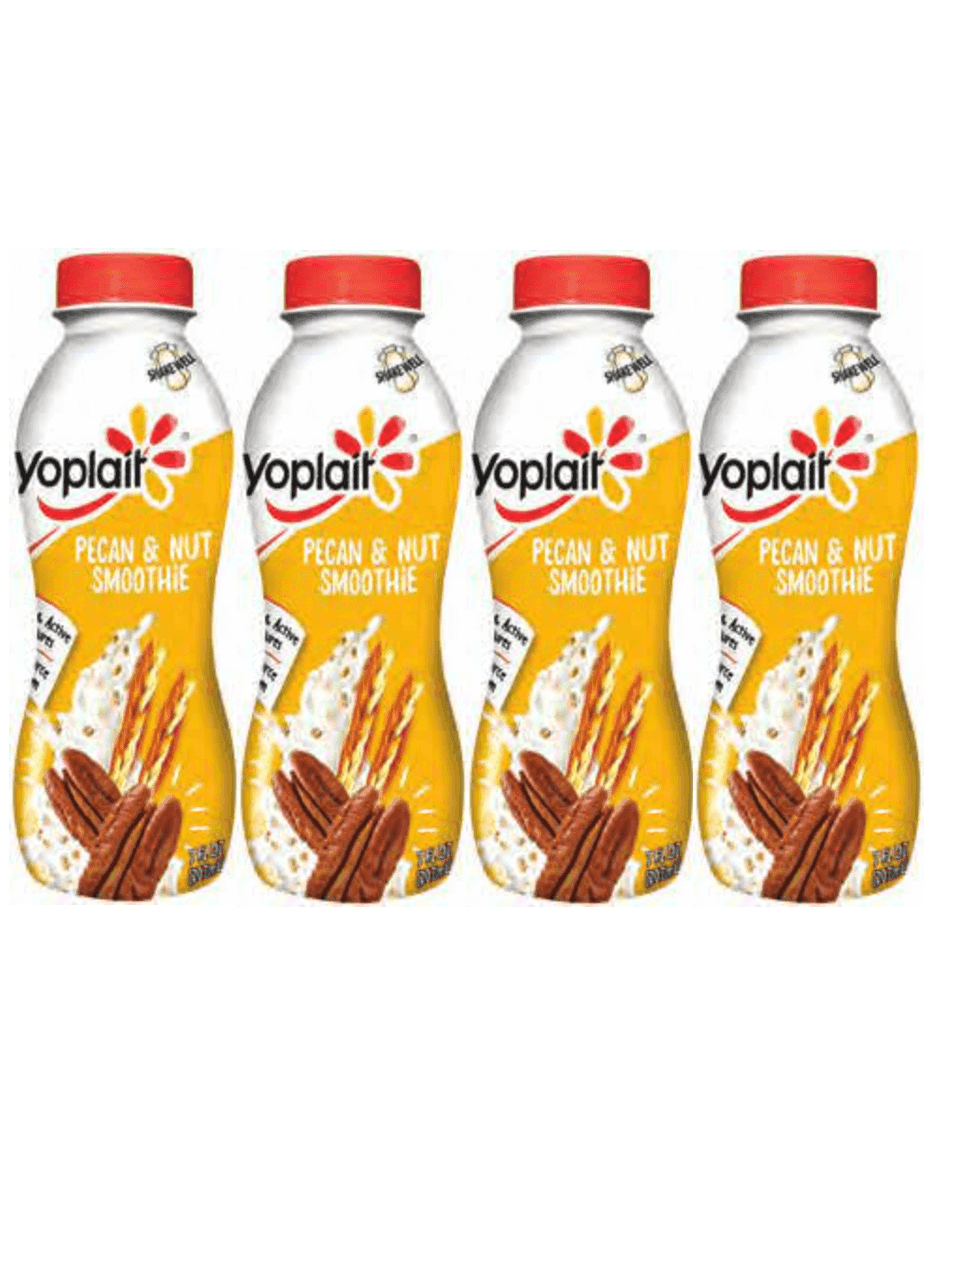 Yoplait - Pecan & Nut Smoothie 4ct/7oz Bottle